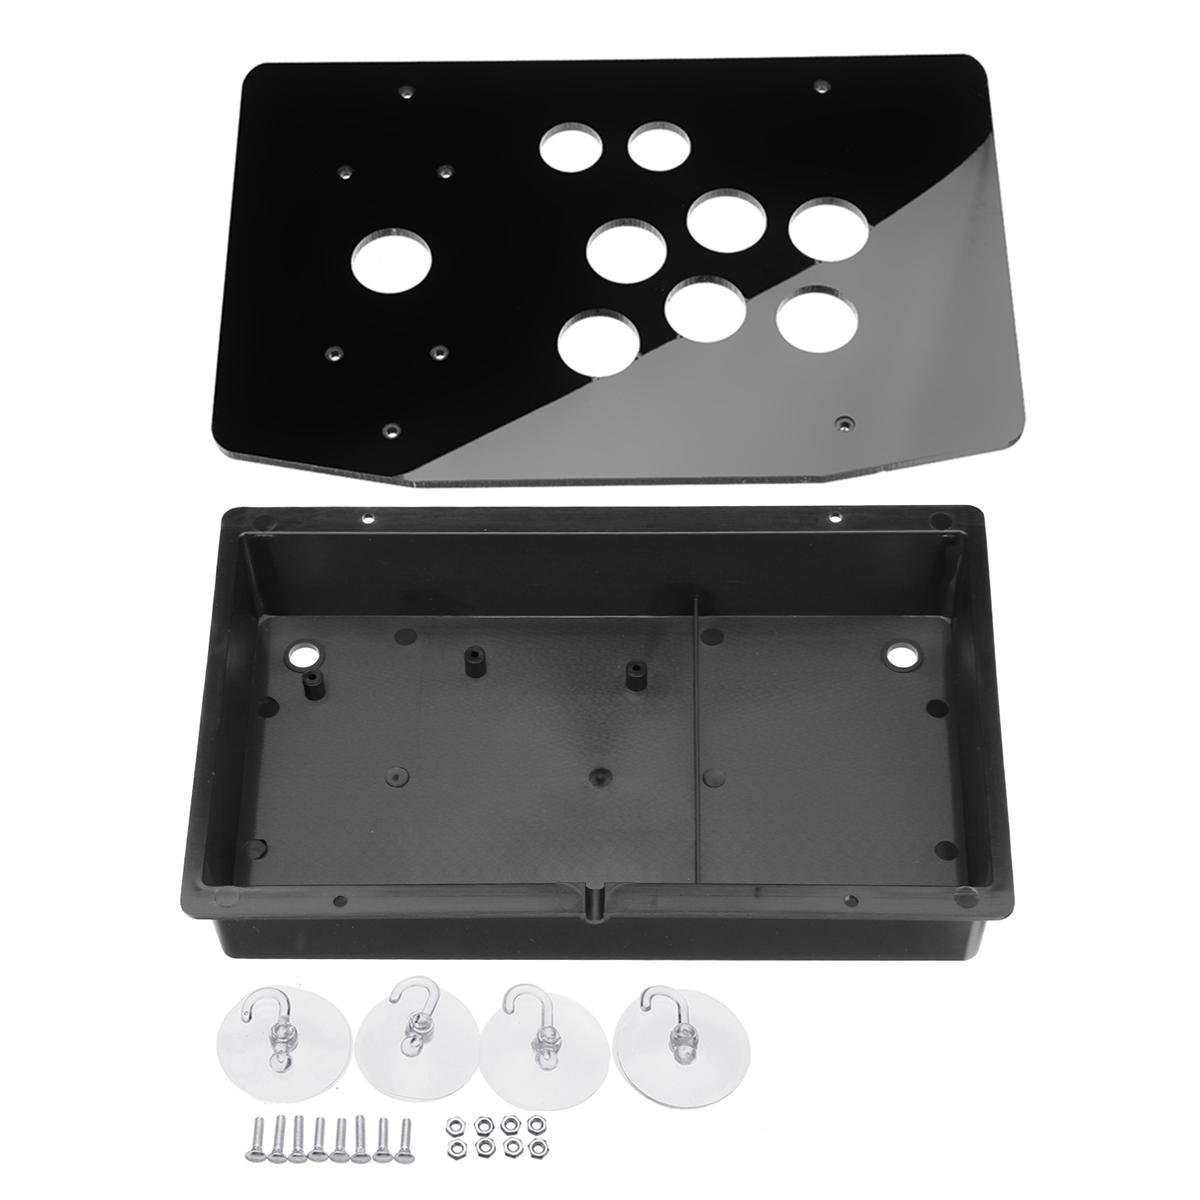 DIY Clear Black Acrylic Panel Case Sturdy Construction for Arcade Joystick Game Controller 19